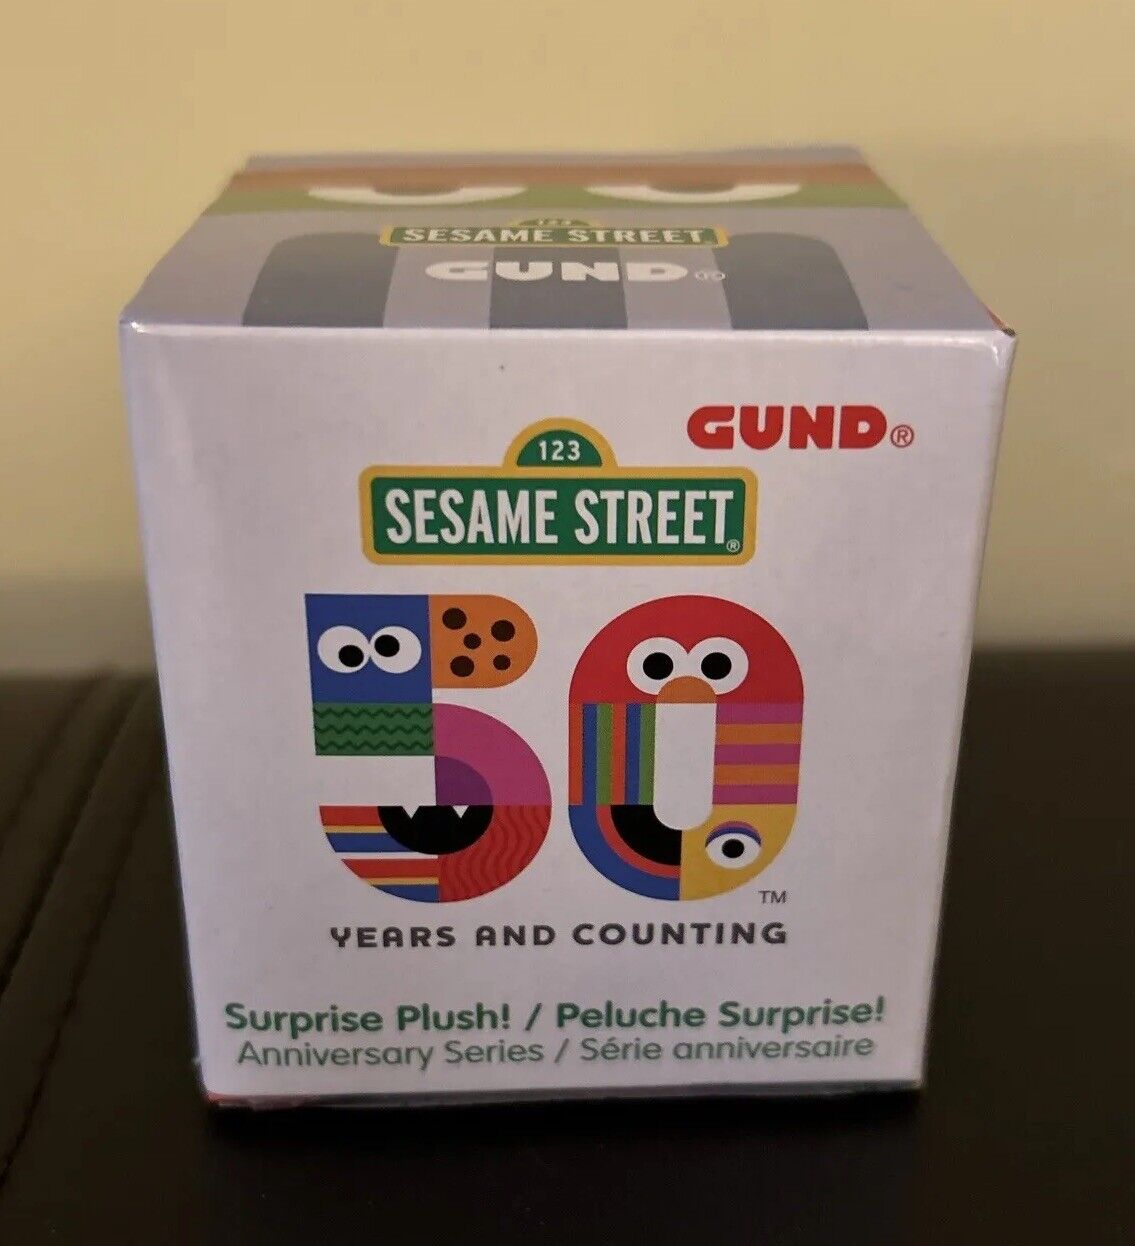 Gund Sesame Street 50th Anniversary One Random Blind Box Mystery Plush